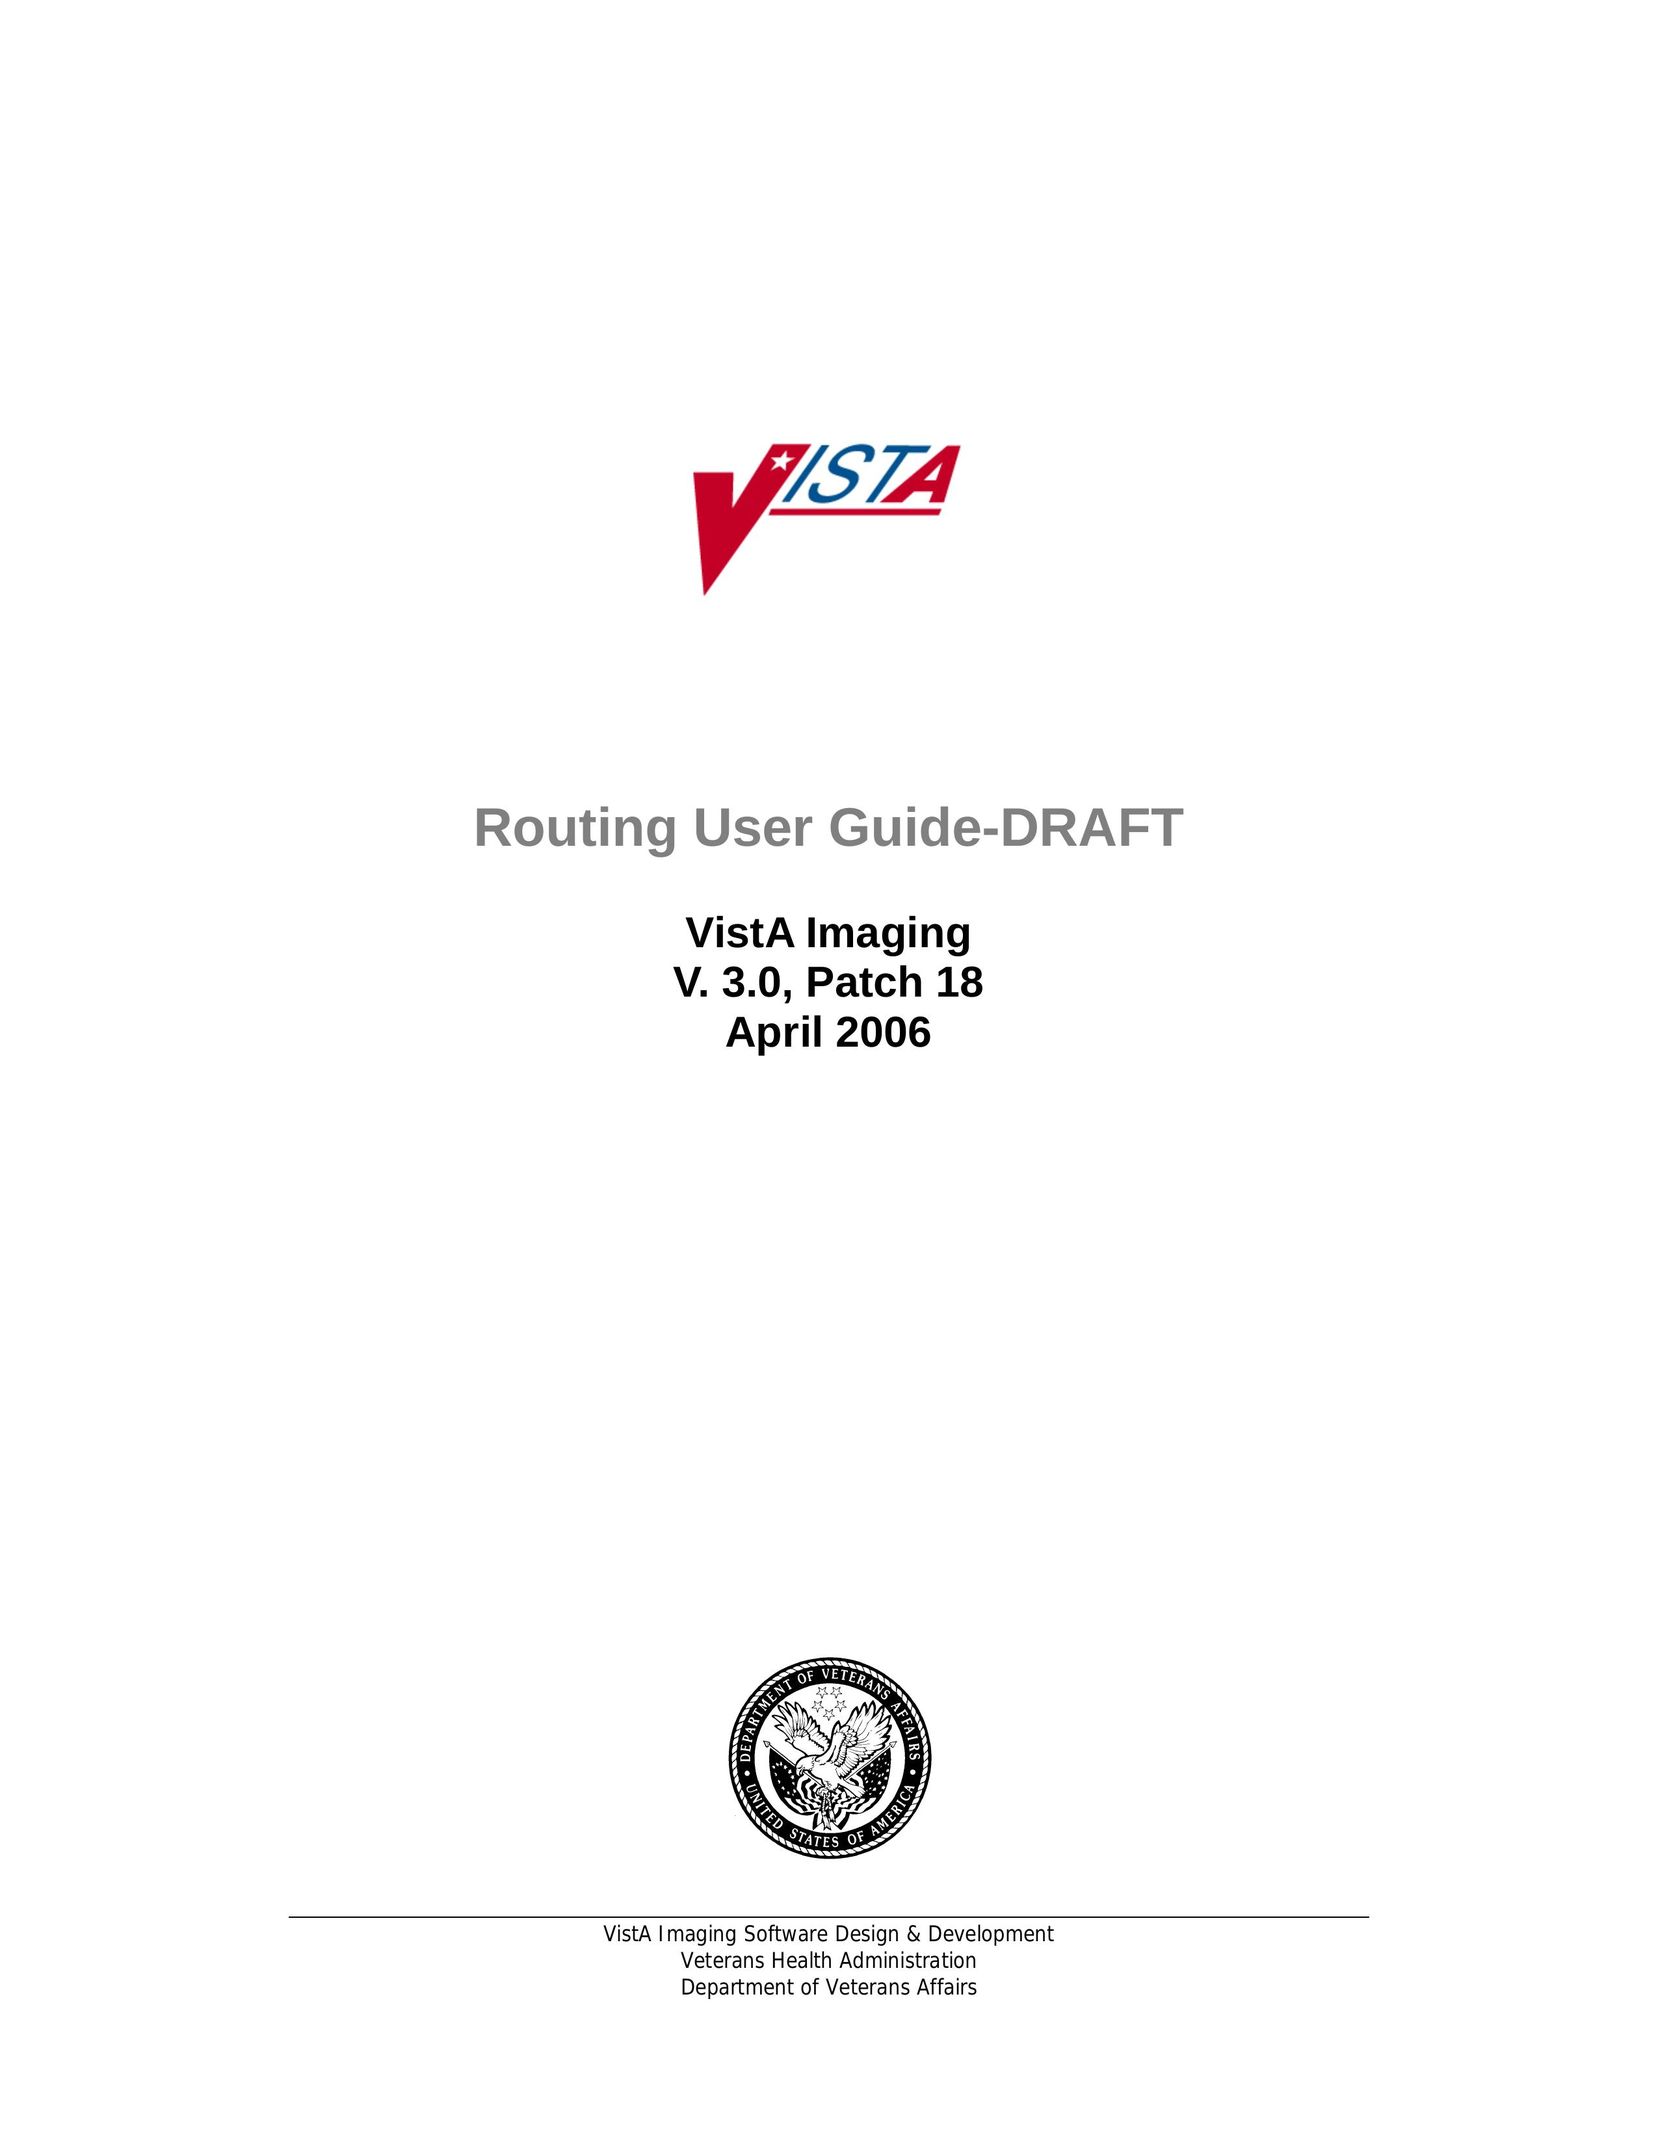 Vista Imaging Vista Routing Network Router User Manual